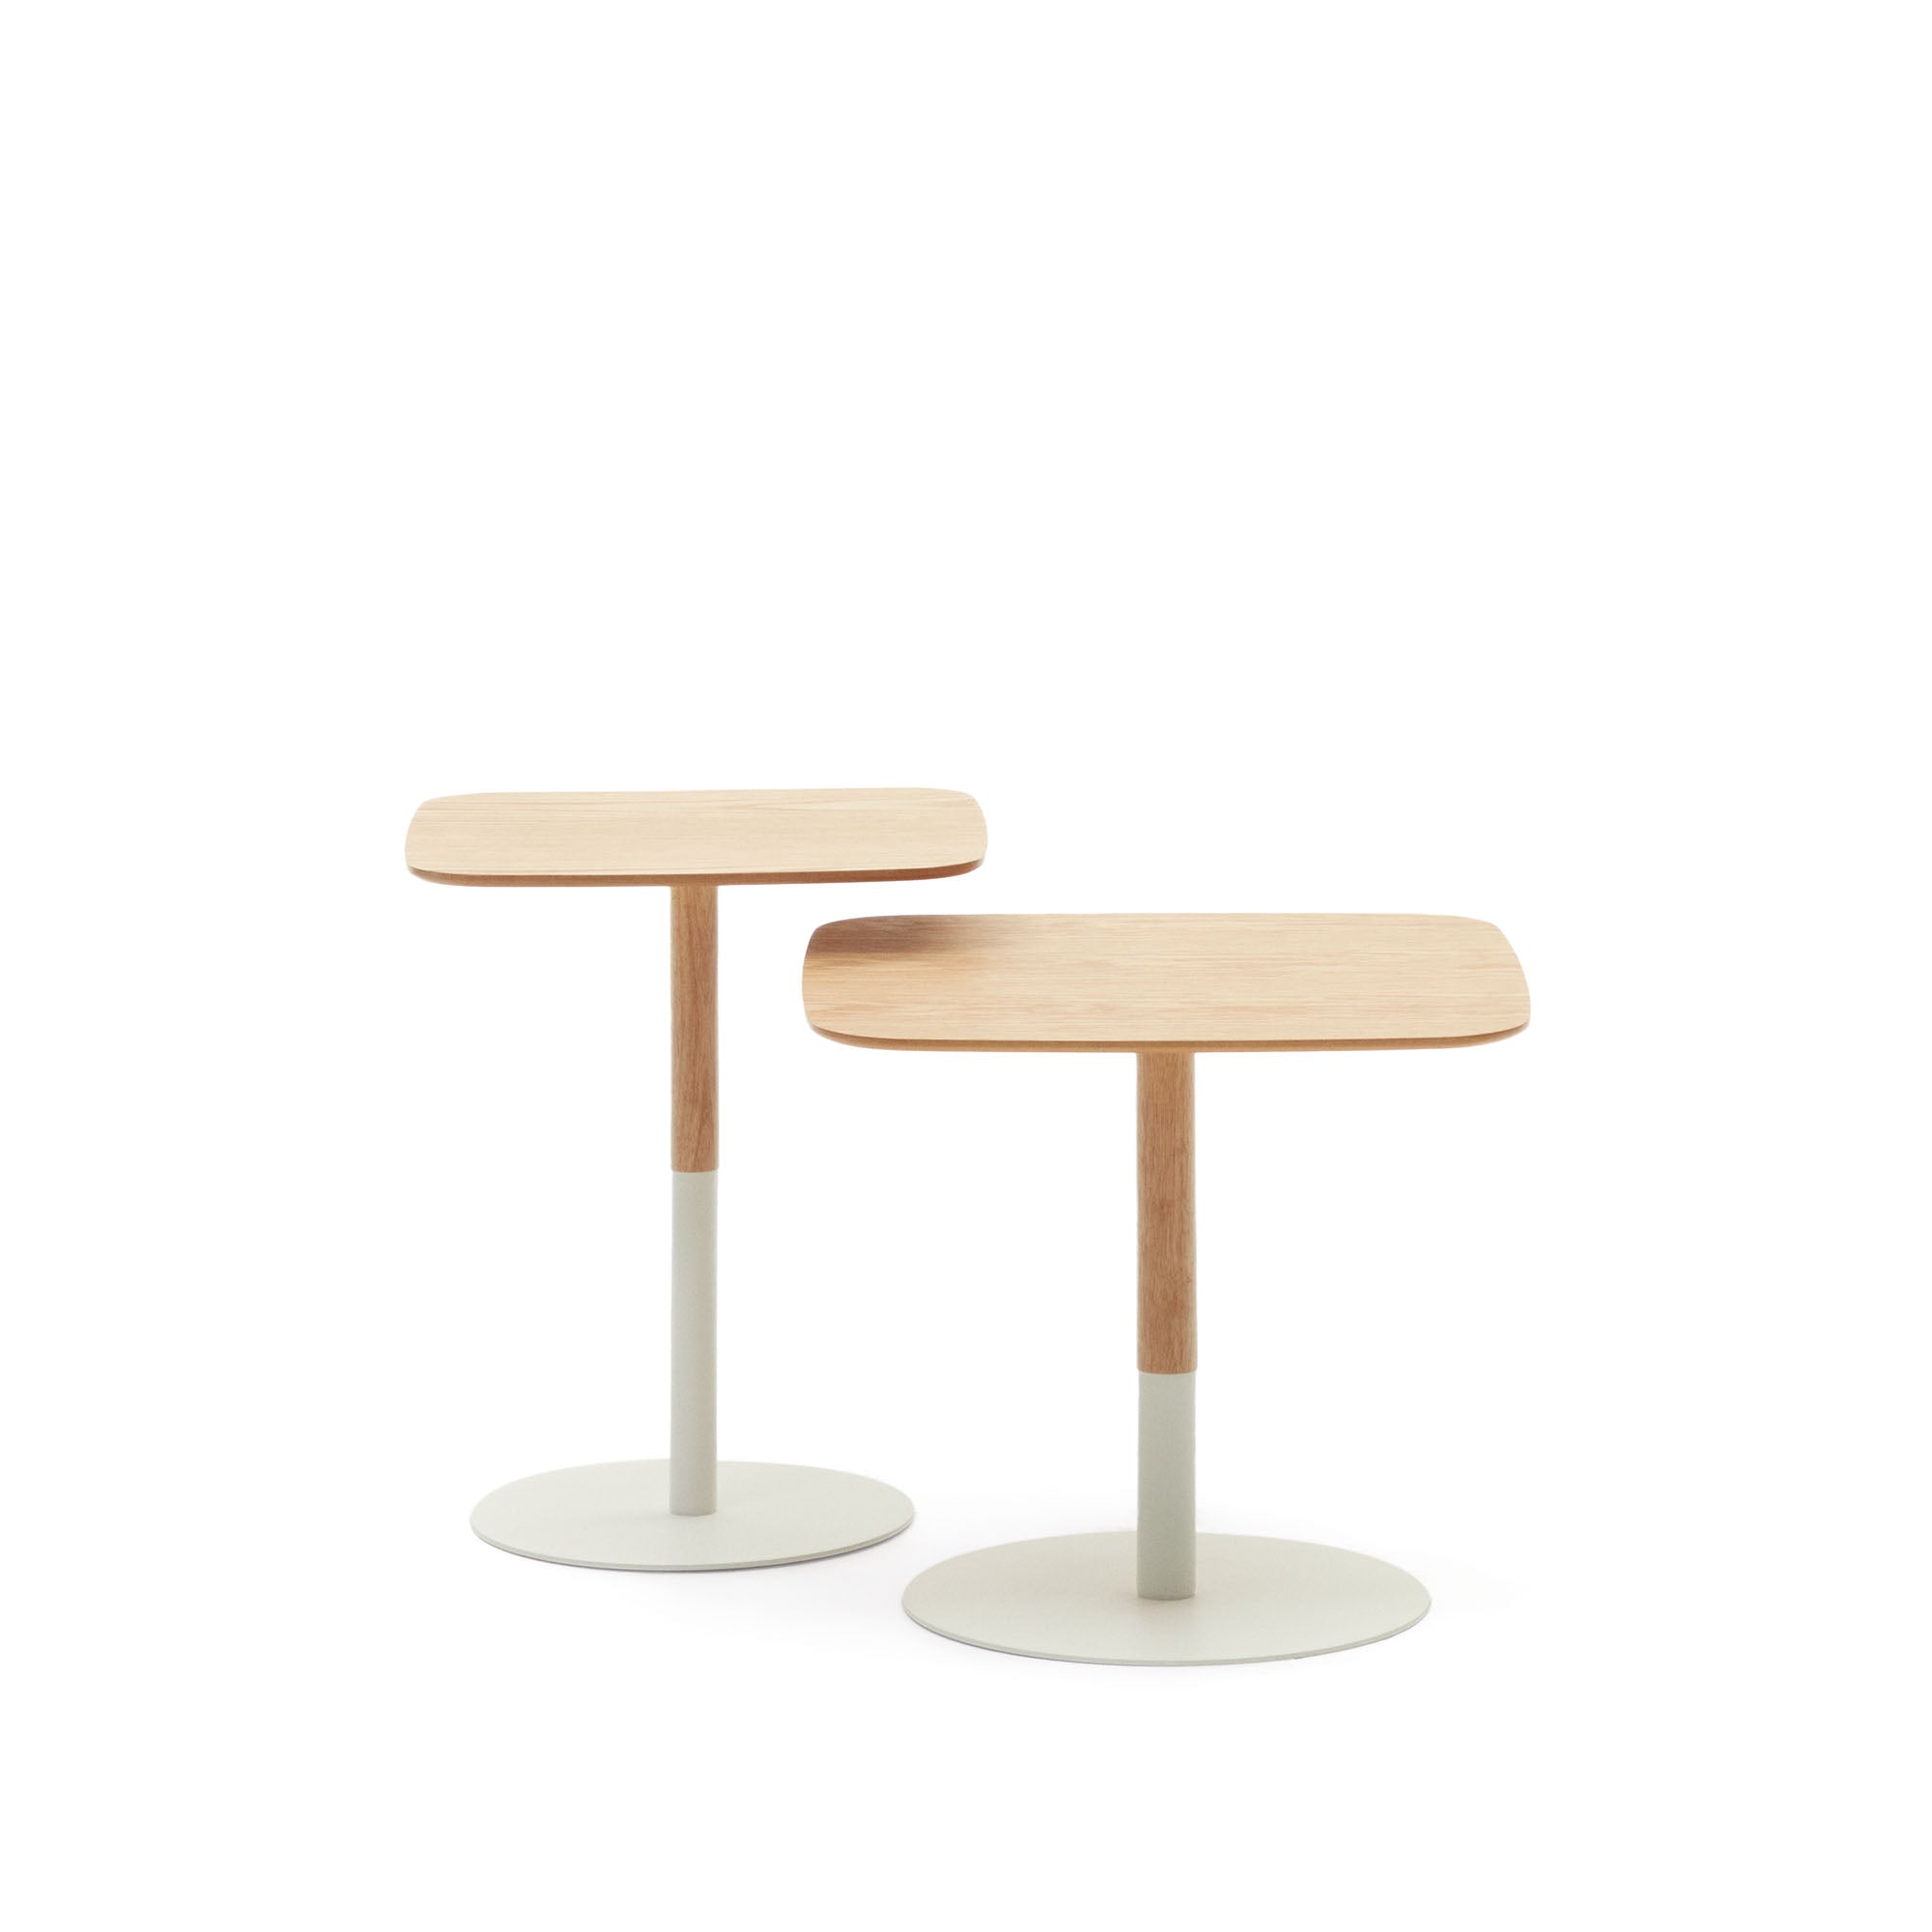 Watse set of 2 side tables in oak wood veneer and matte white metal, FSC Mix Credit